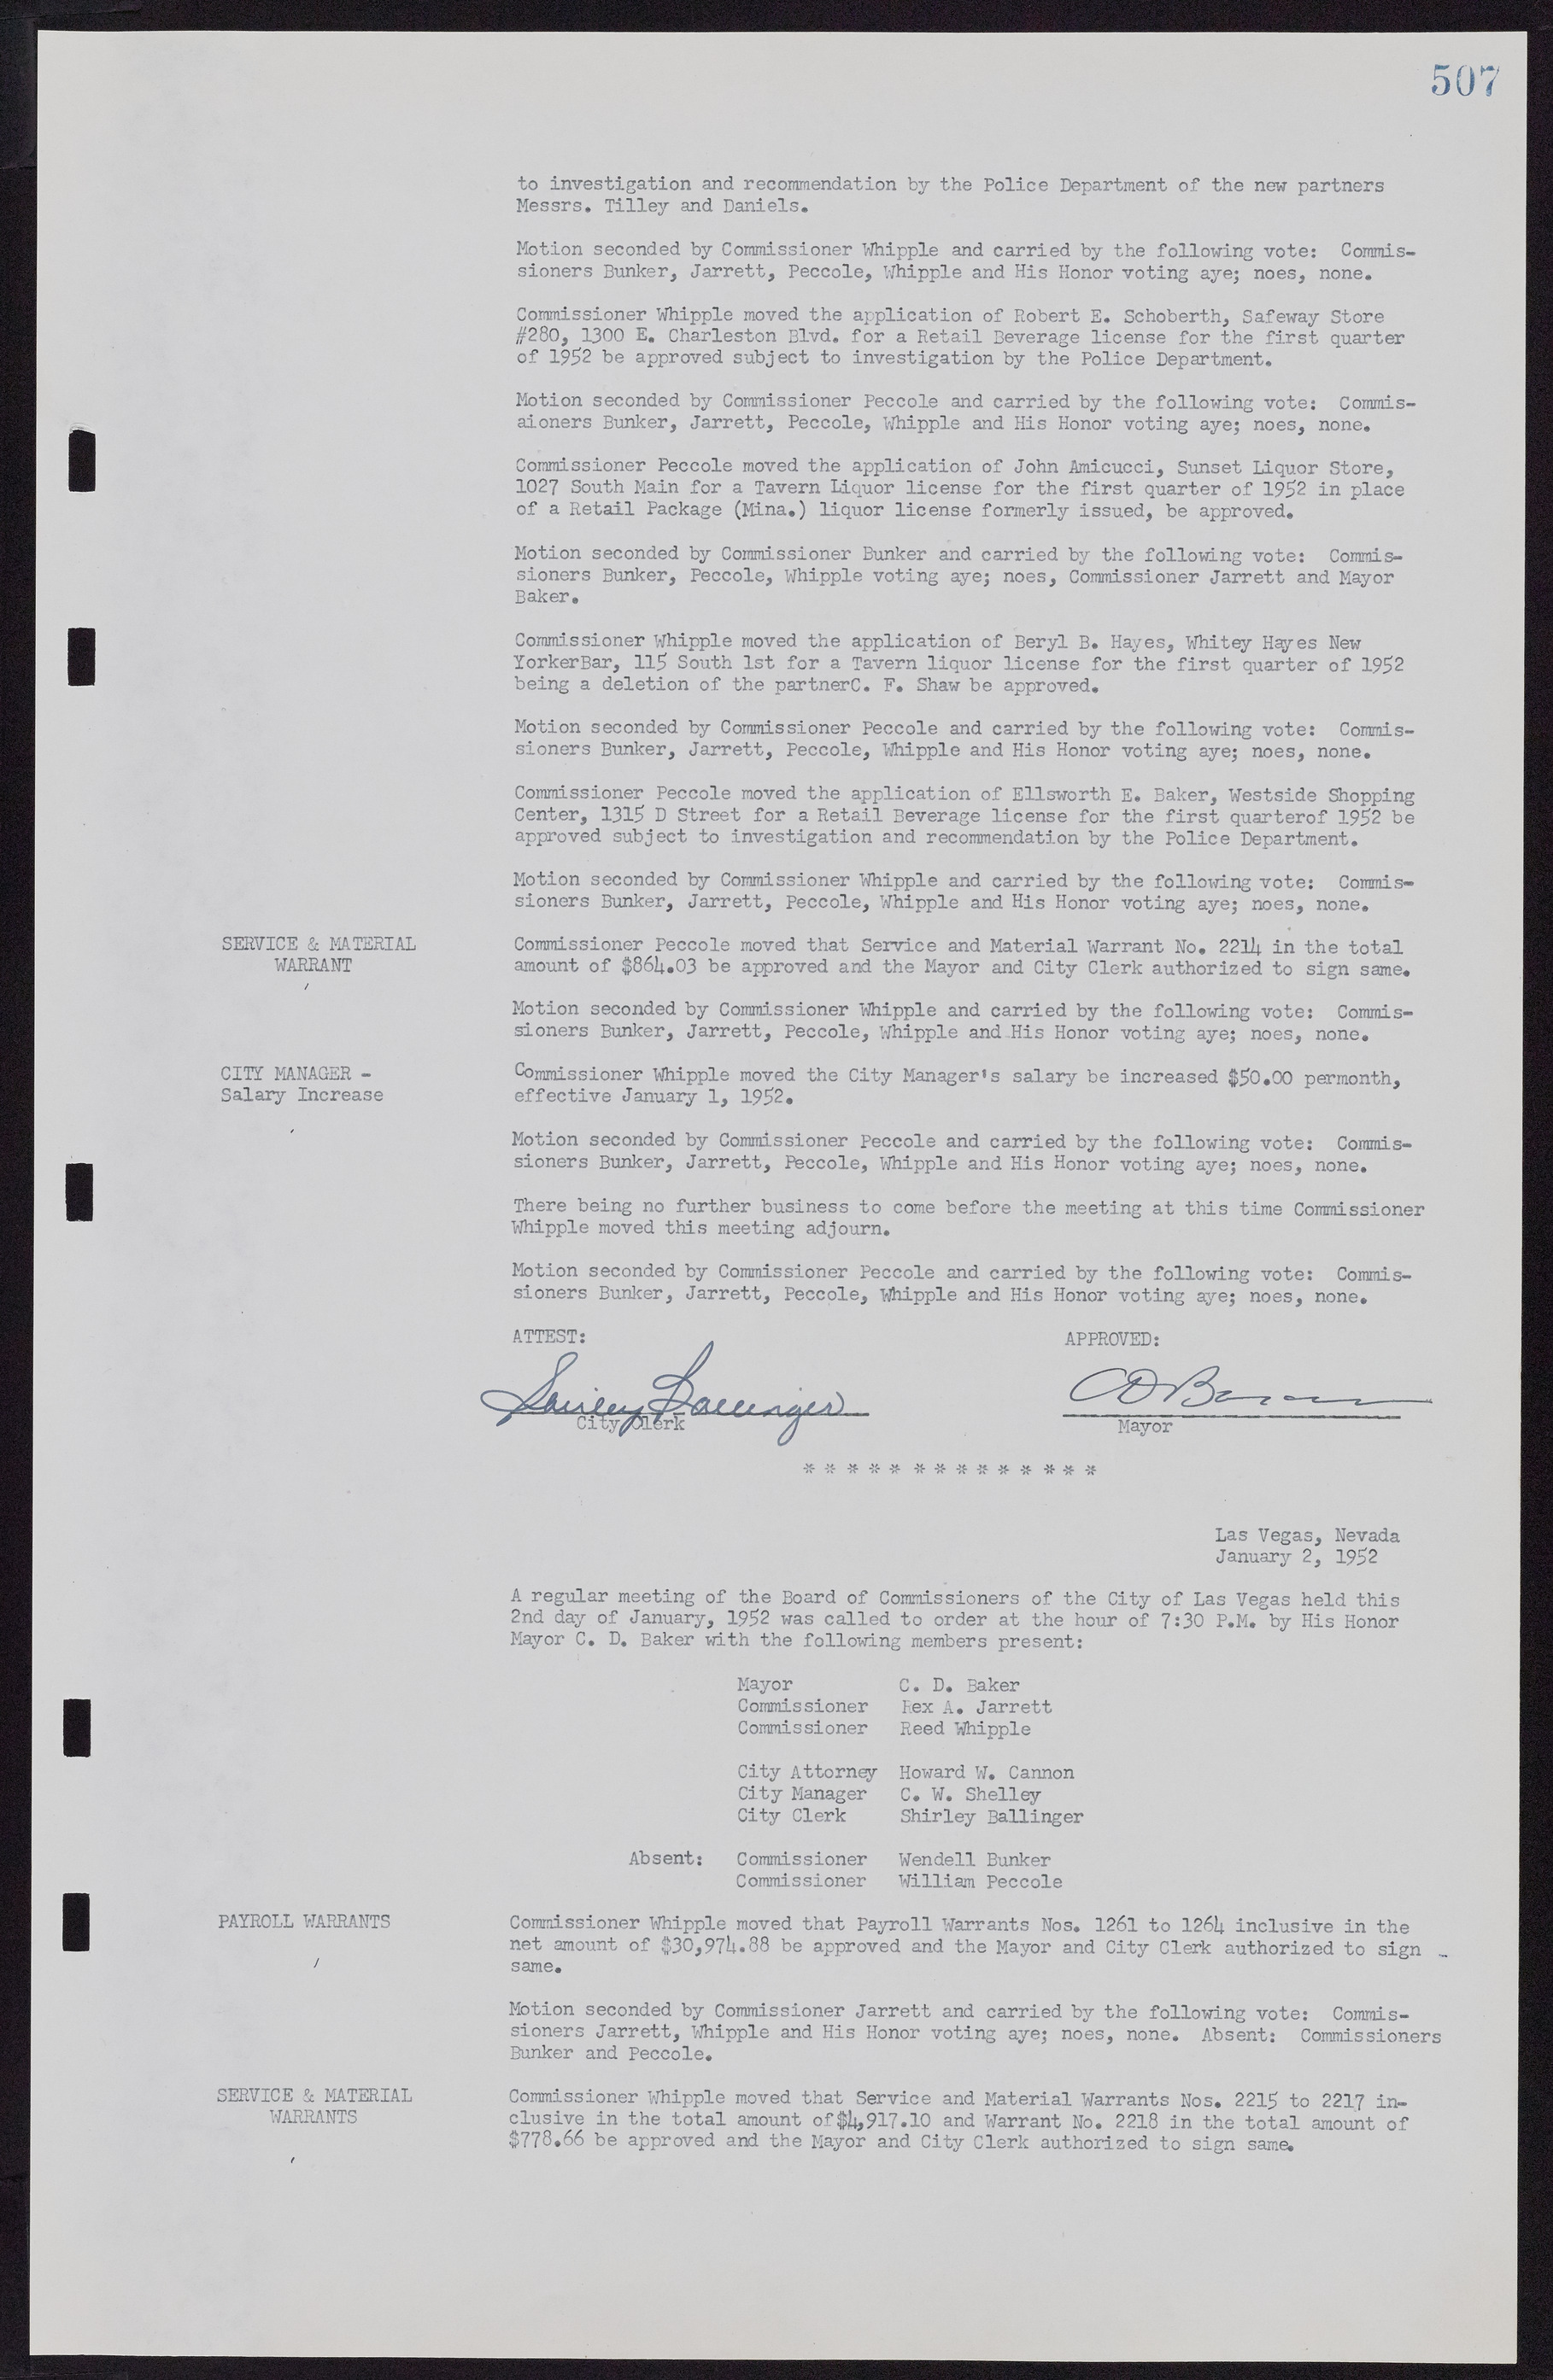 Las Vegas City Commission Minutes, November 7, 1949 to May 21, 1952, lvc000007-525